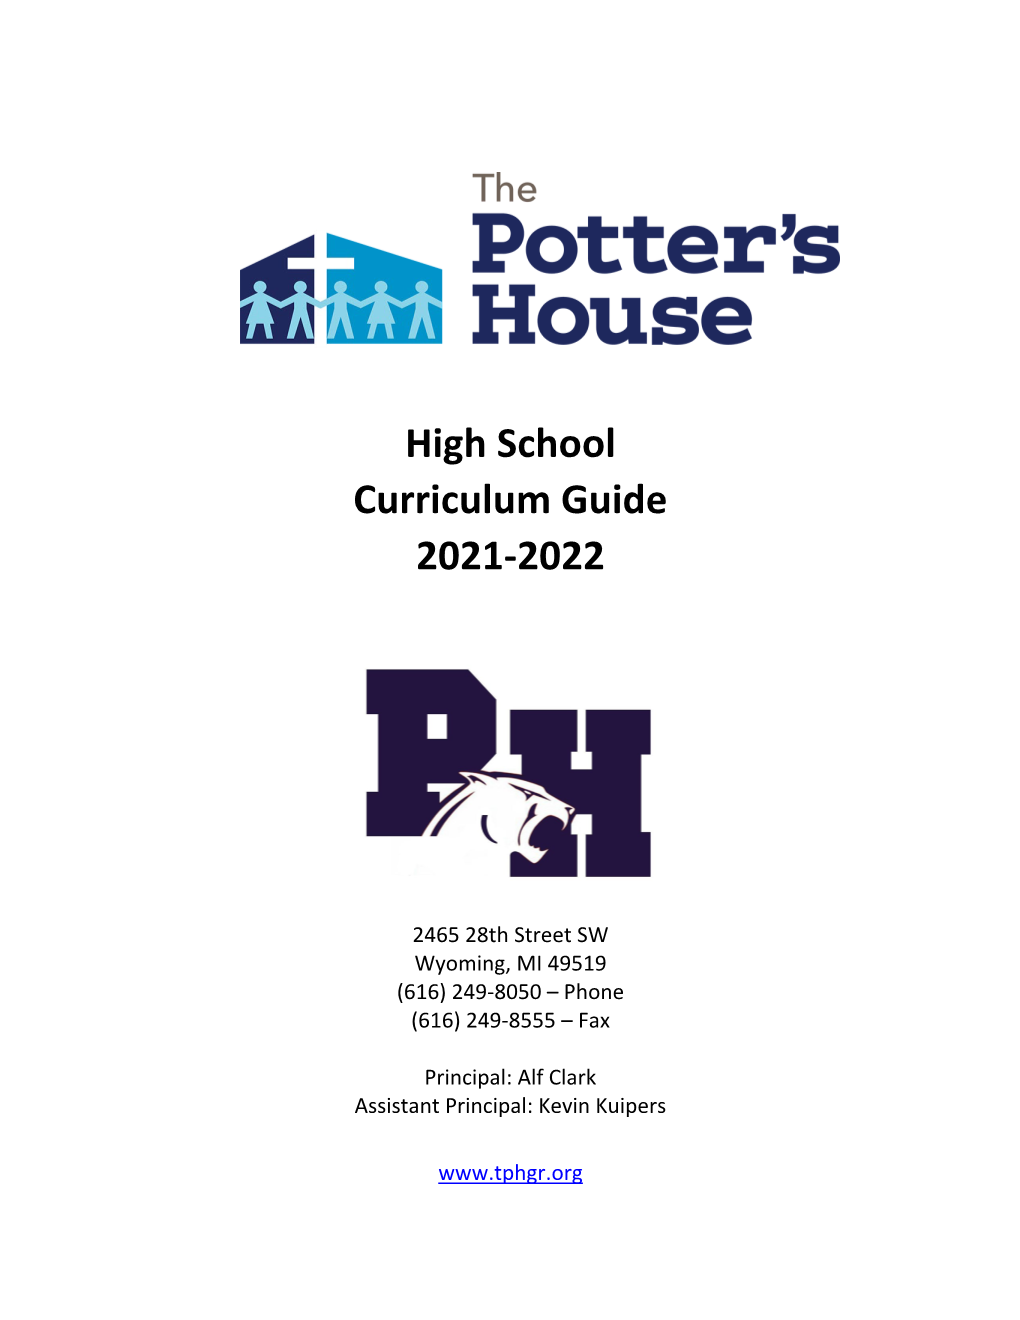 High School Curriculum Guide 2021-2022